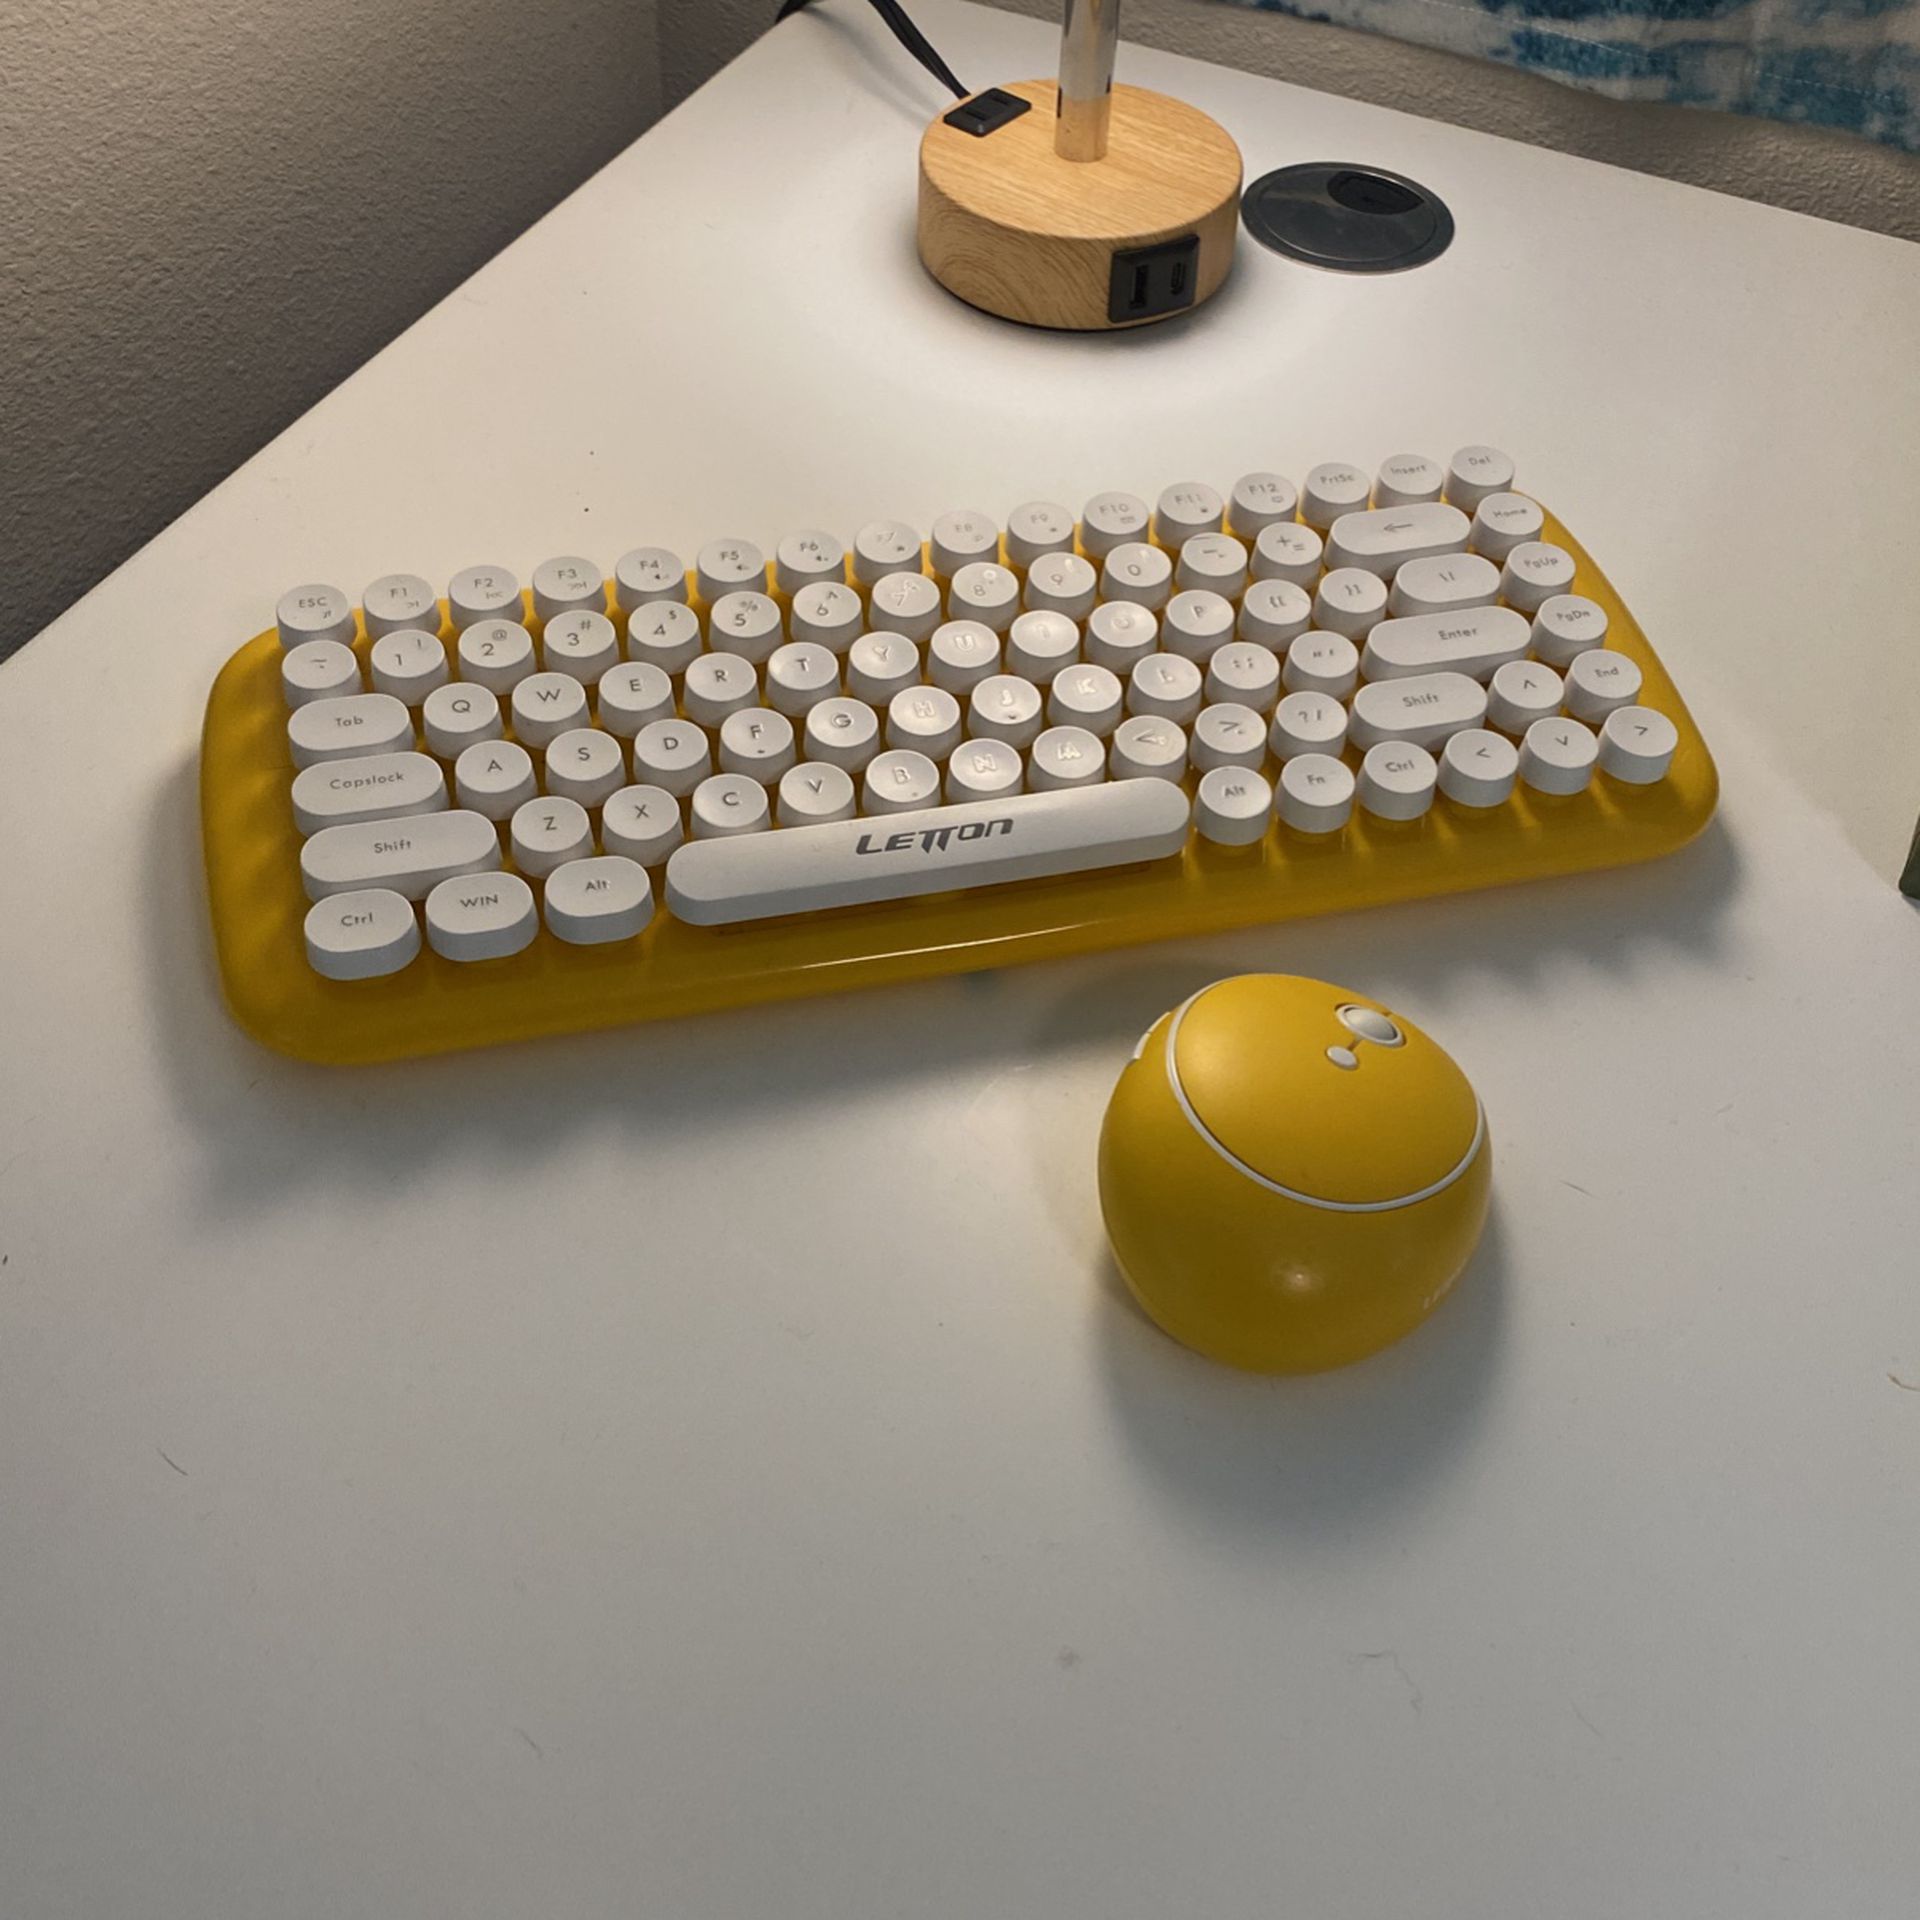 Typewriter Type Keyboard With Mouse